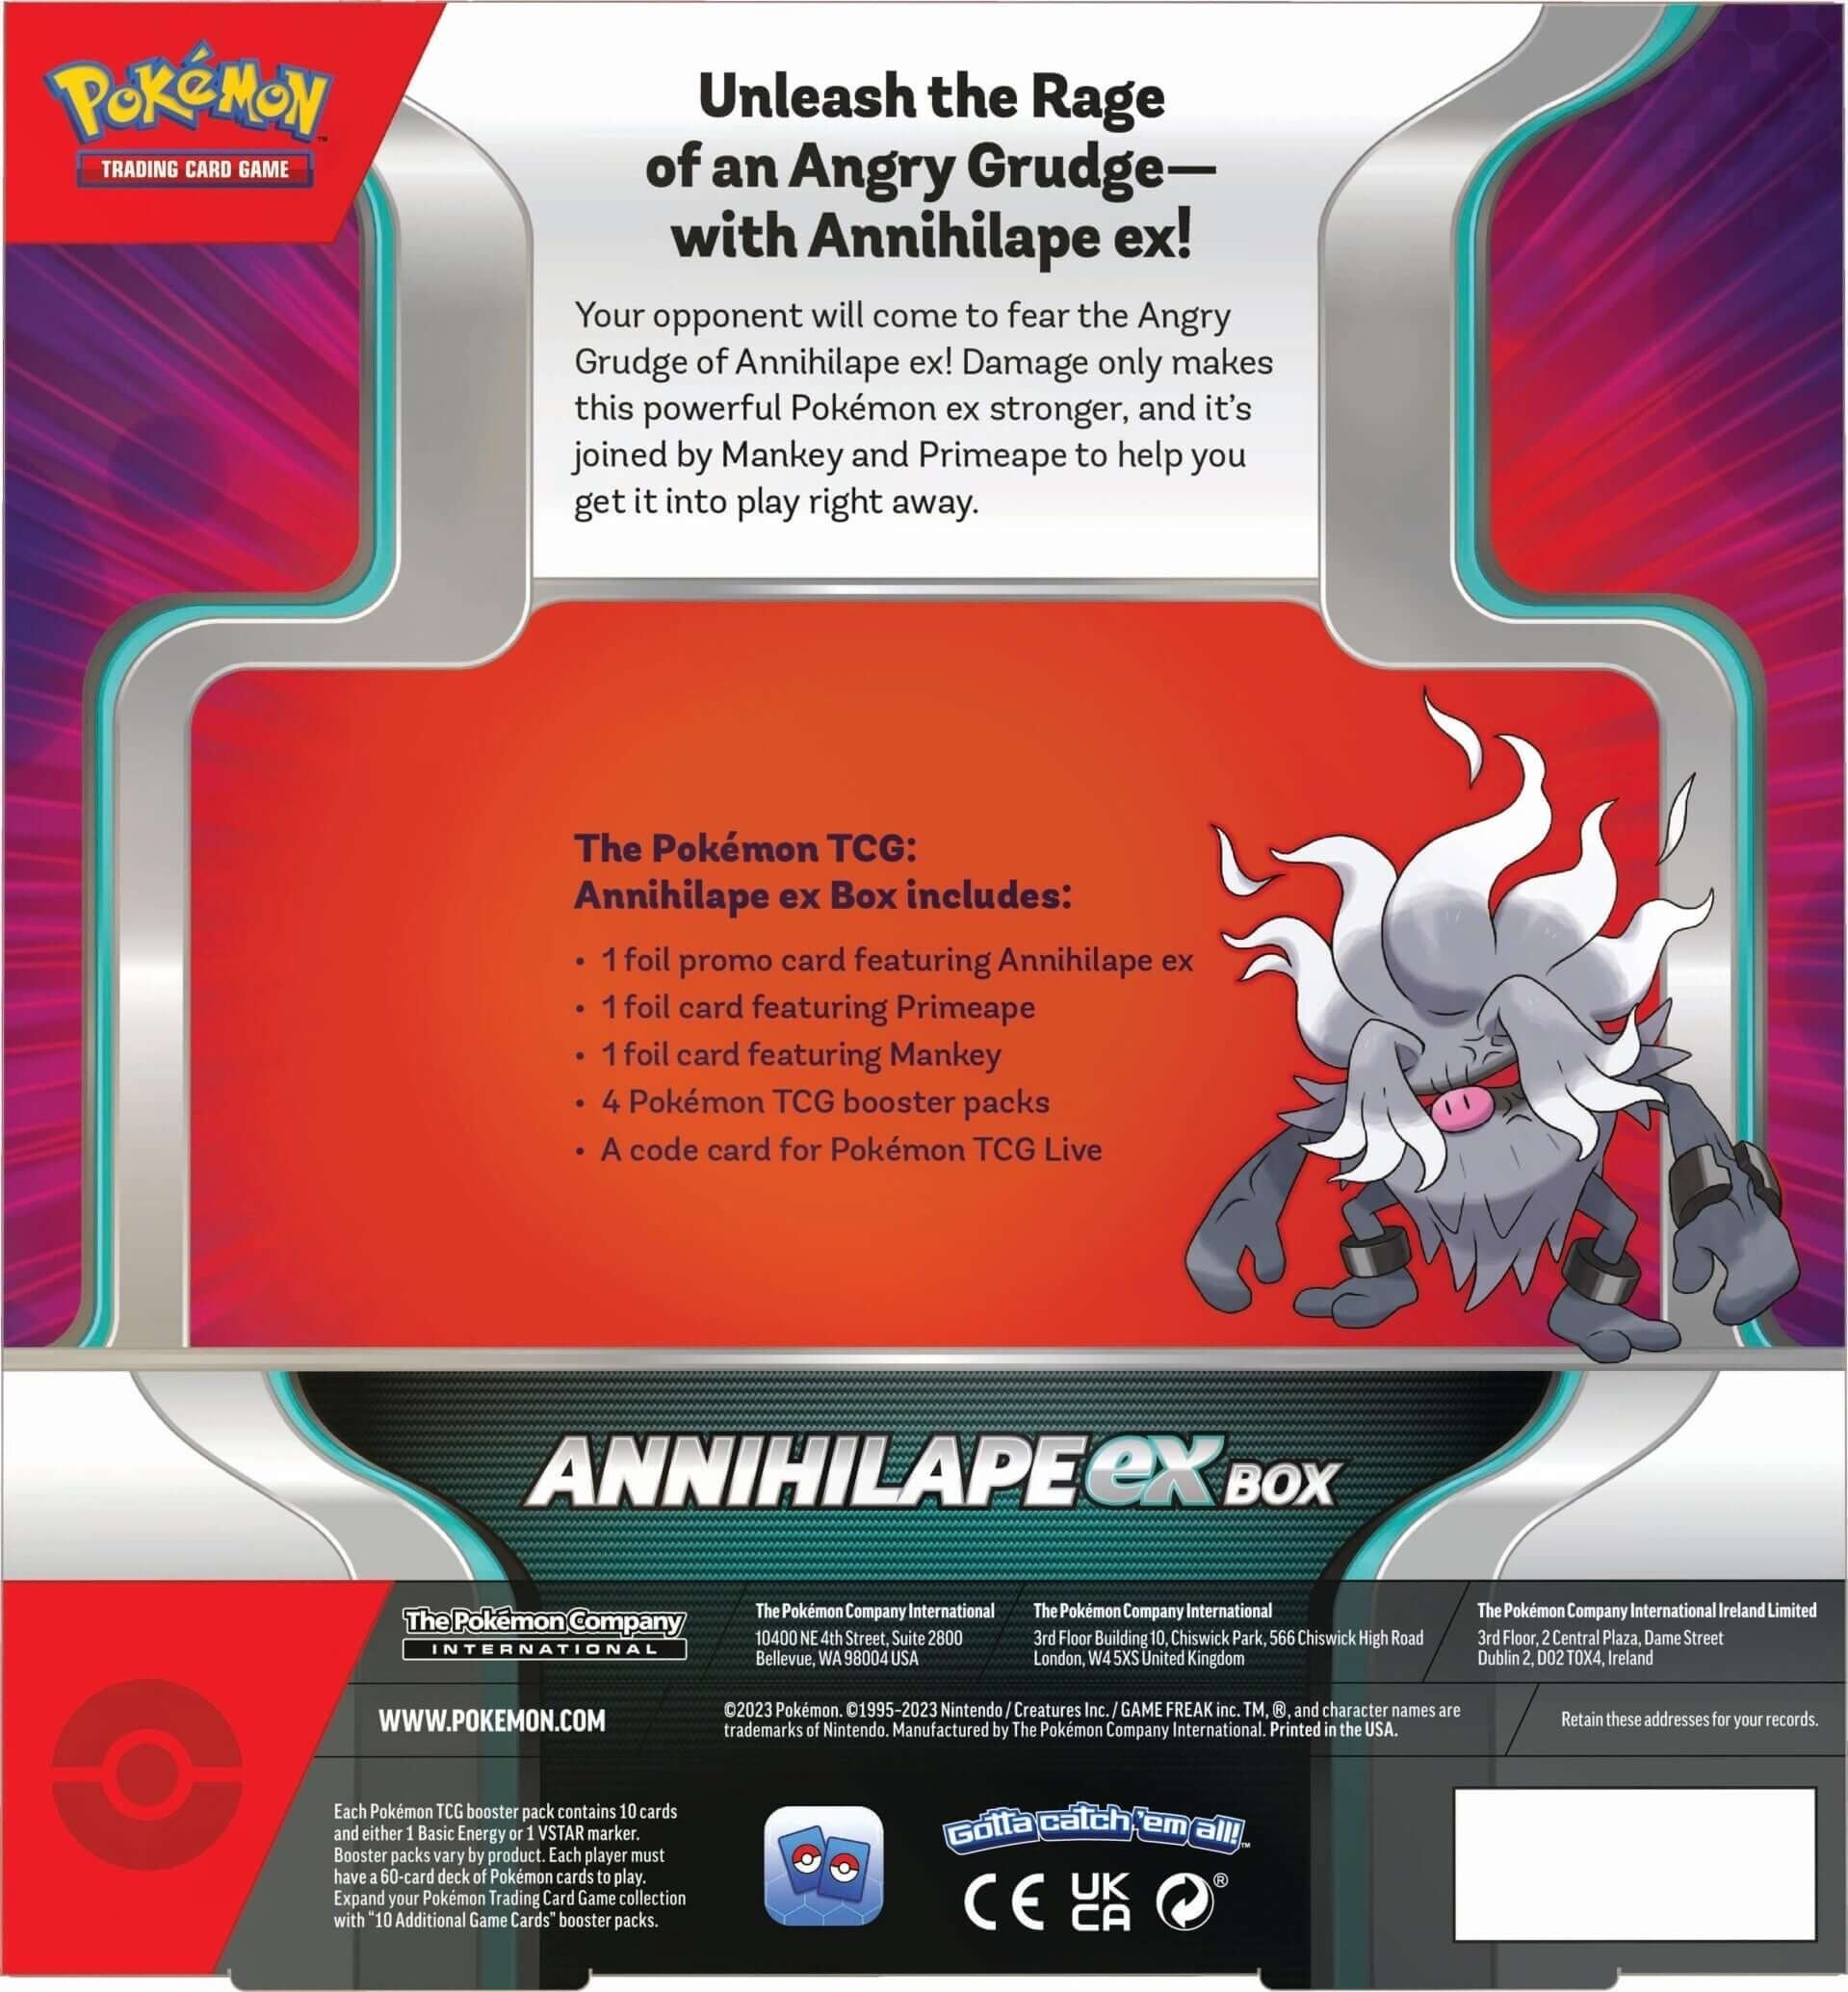 Pokémon Annihilape ex Box #290-85245